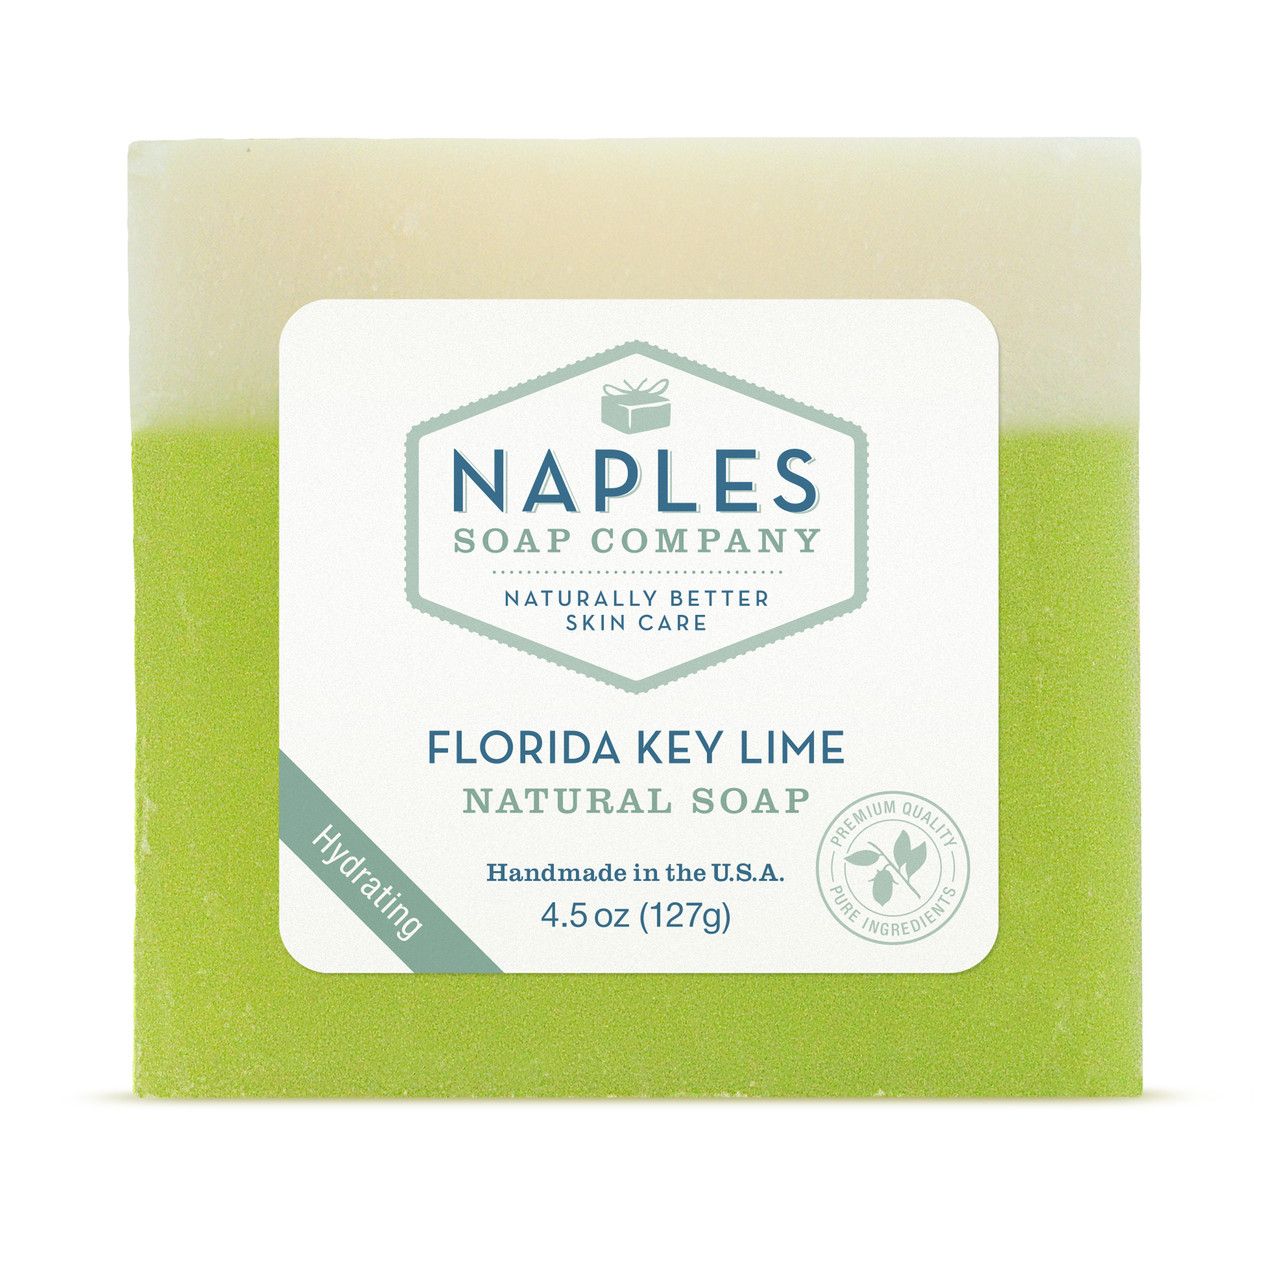 Florida Key Lime Natural Soap | Naples Soap Company